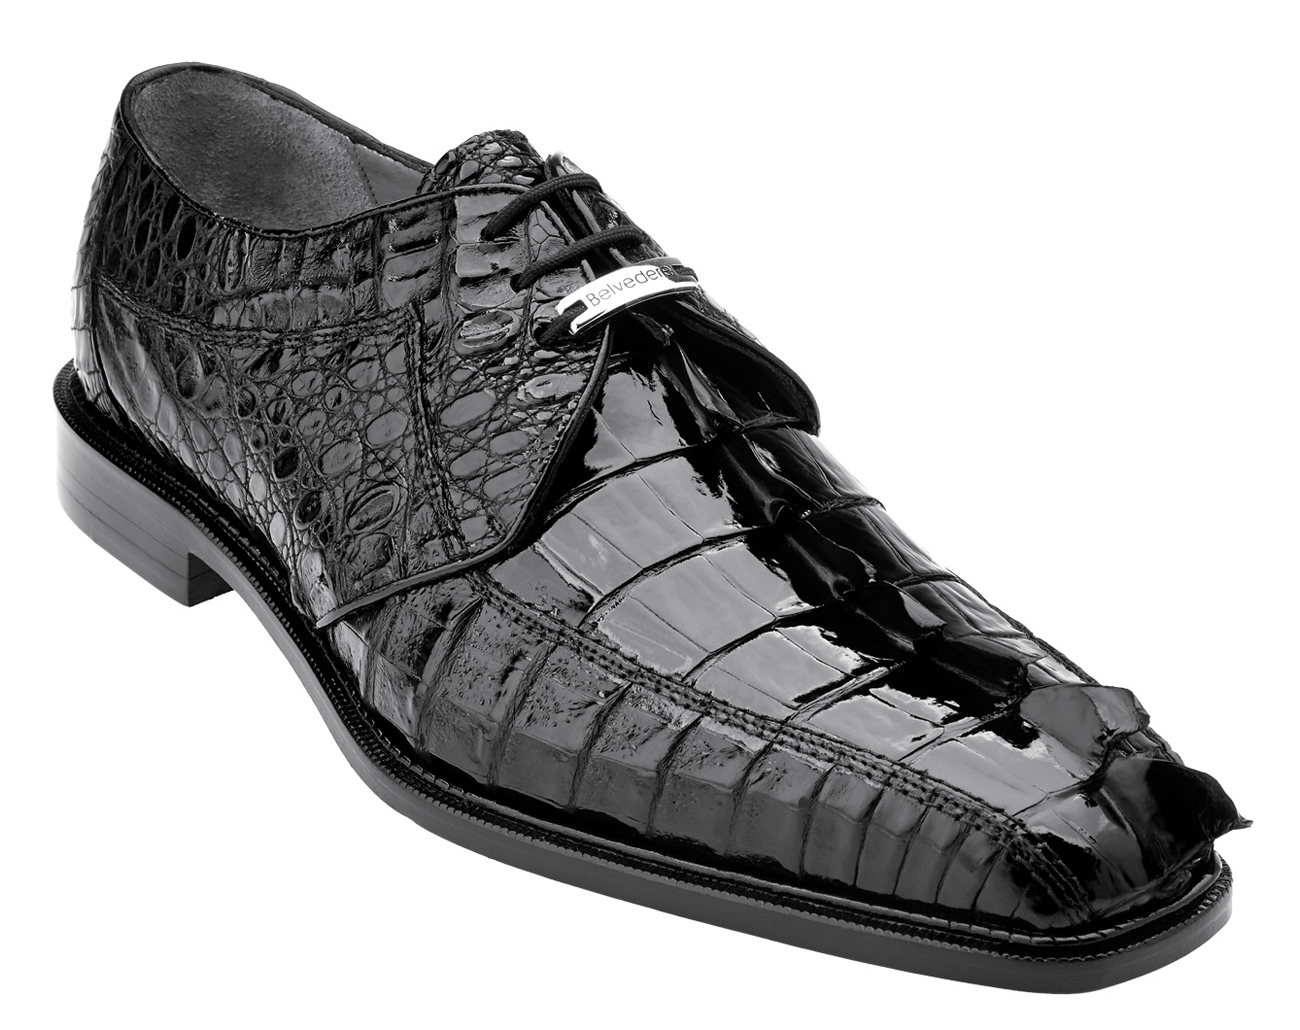 crocodile shoes for sale